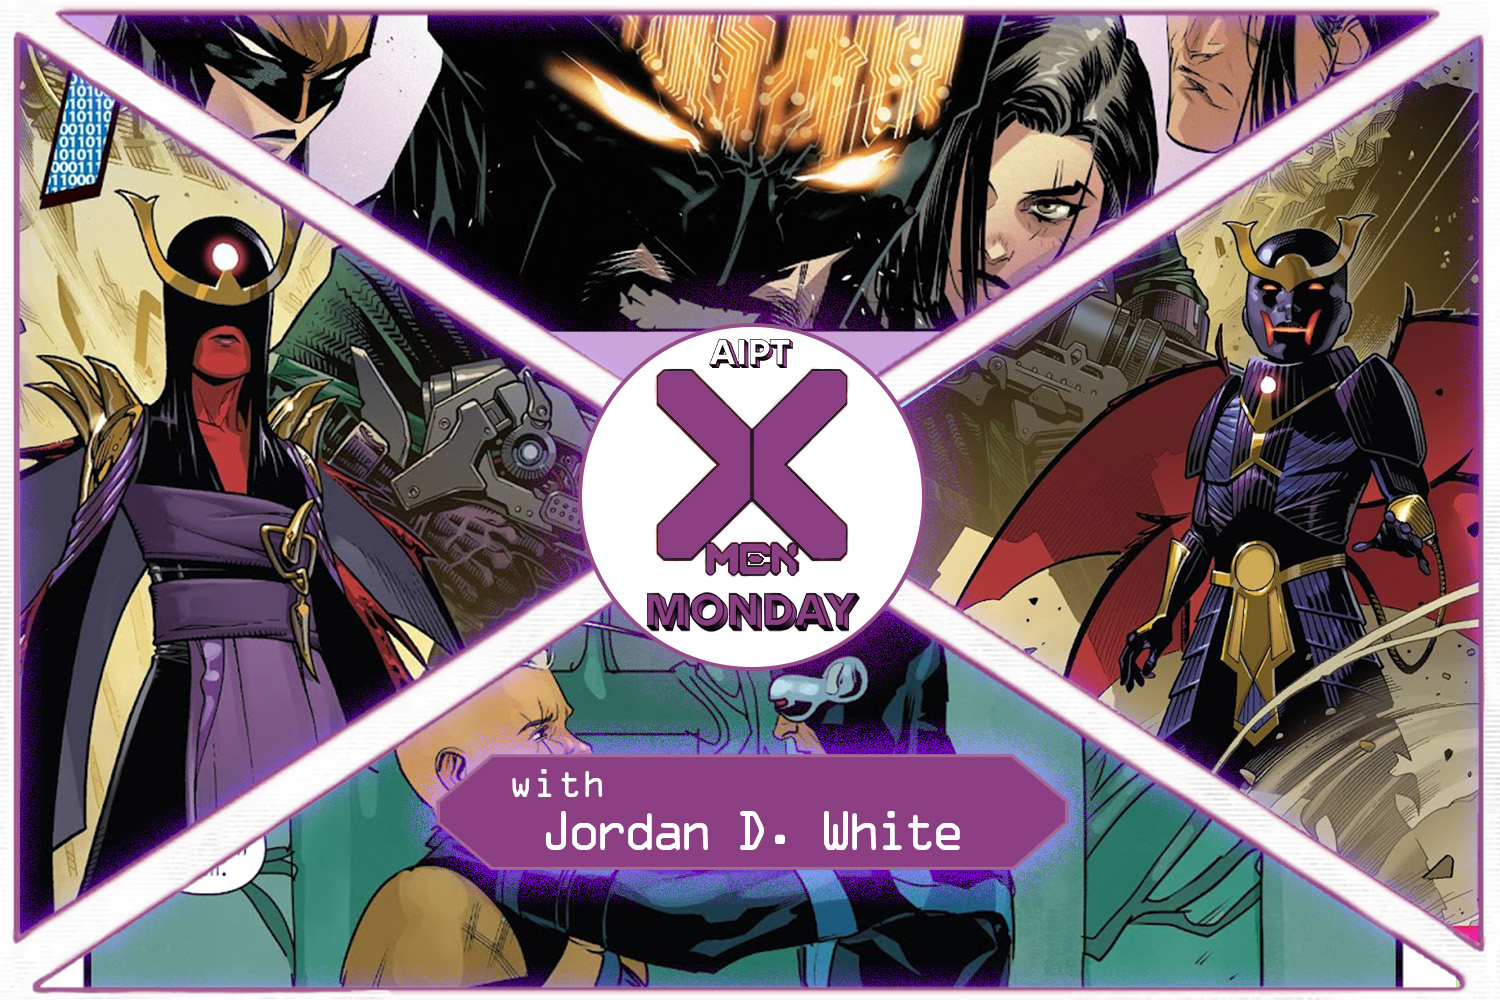 X-Men Monday #160 - X-Dads With Jordan D. White